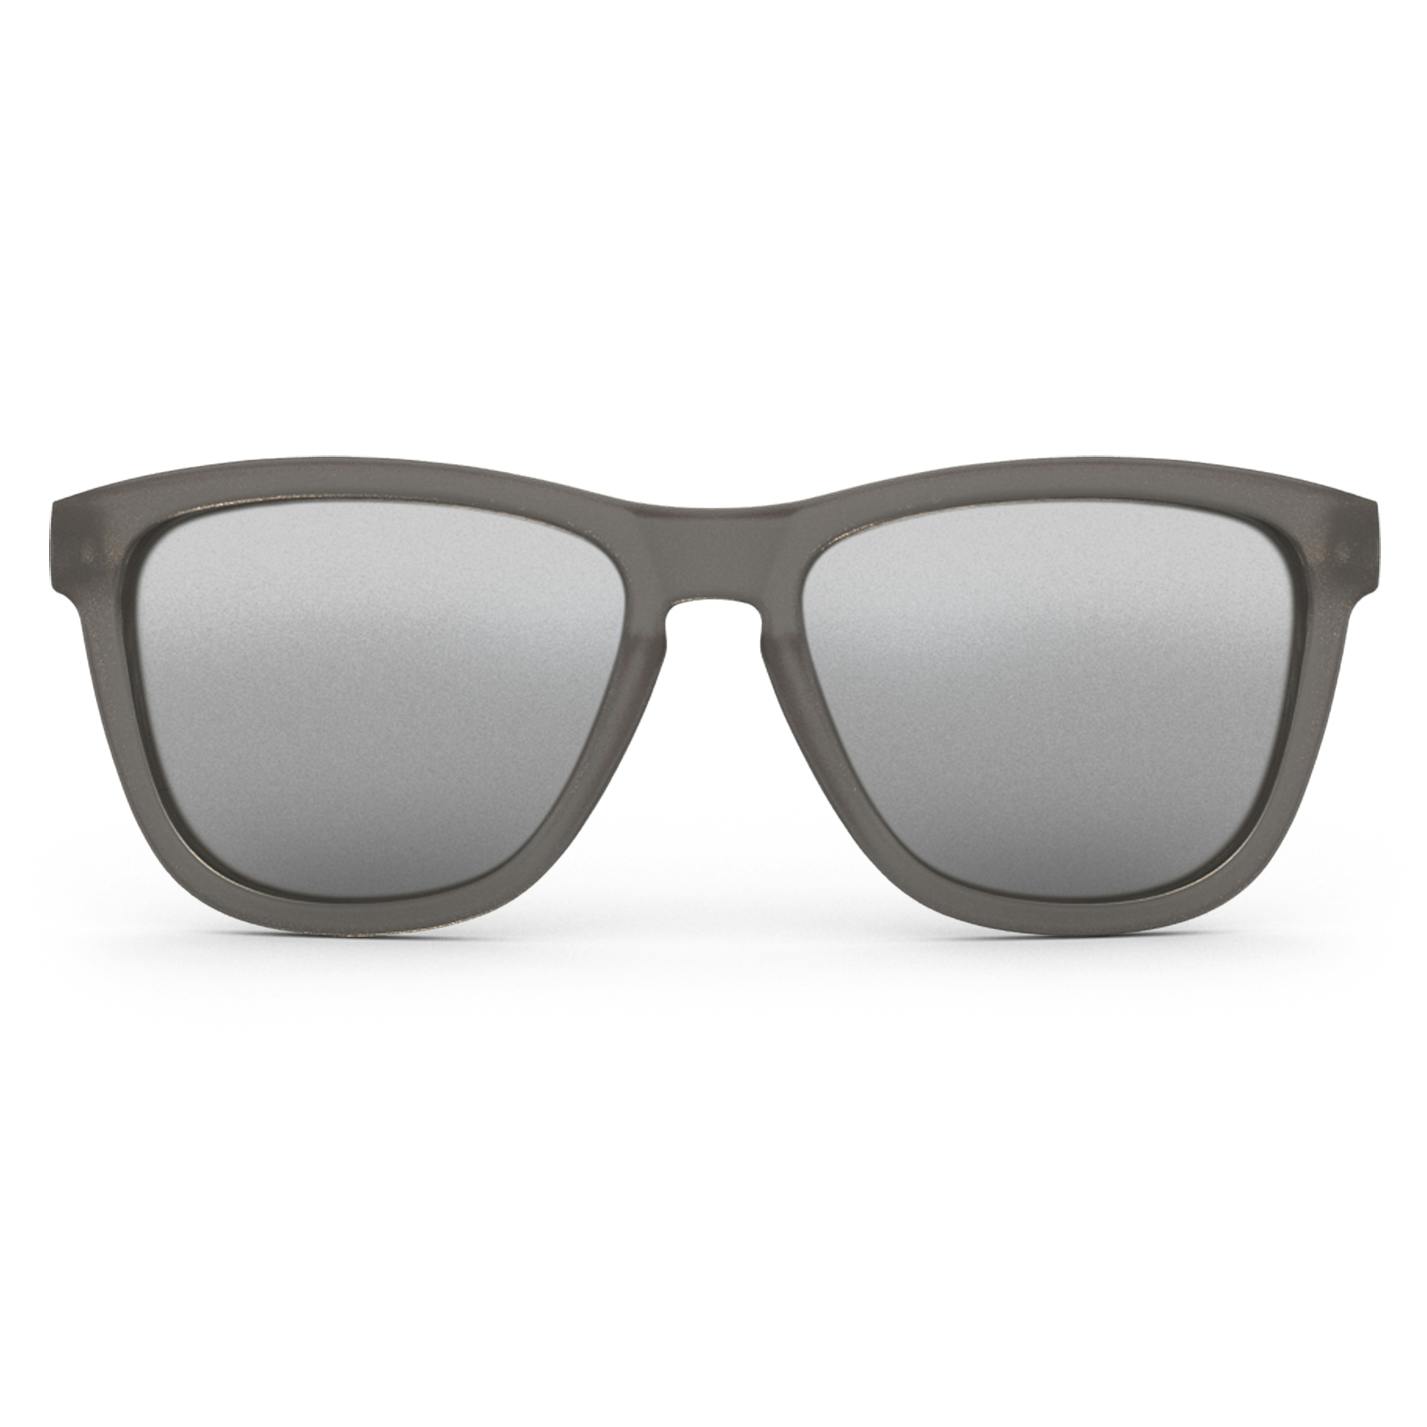 Goodr Lightweight Running Sunglasses - Grey/Chrome, undefined